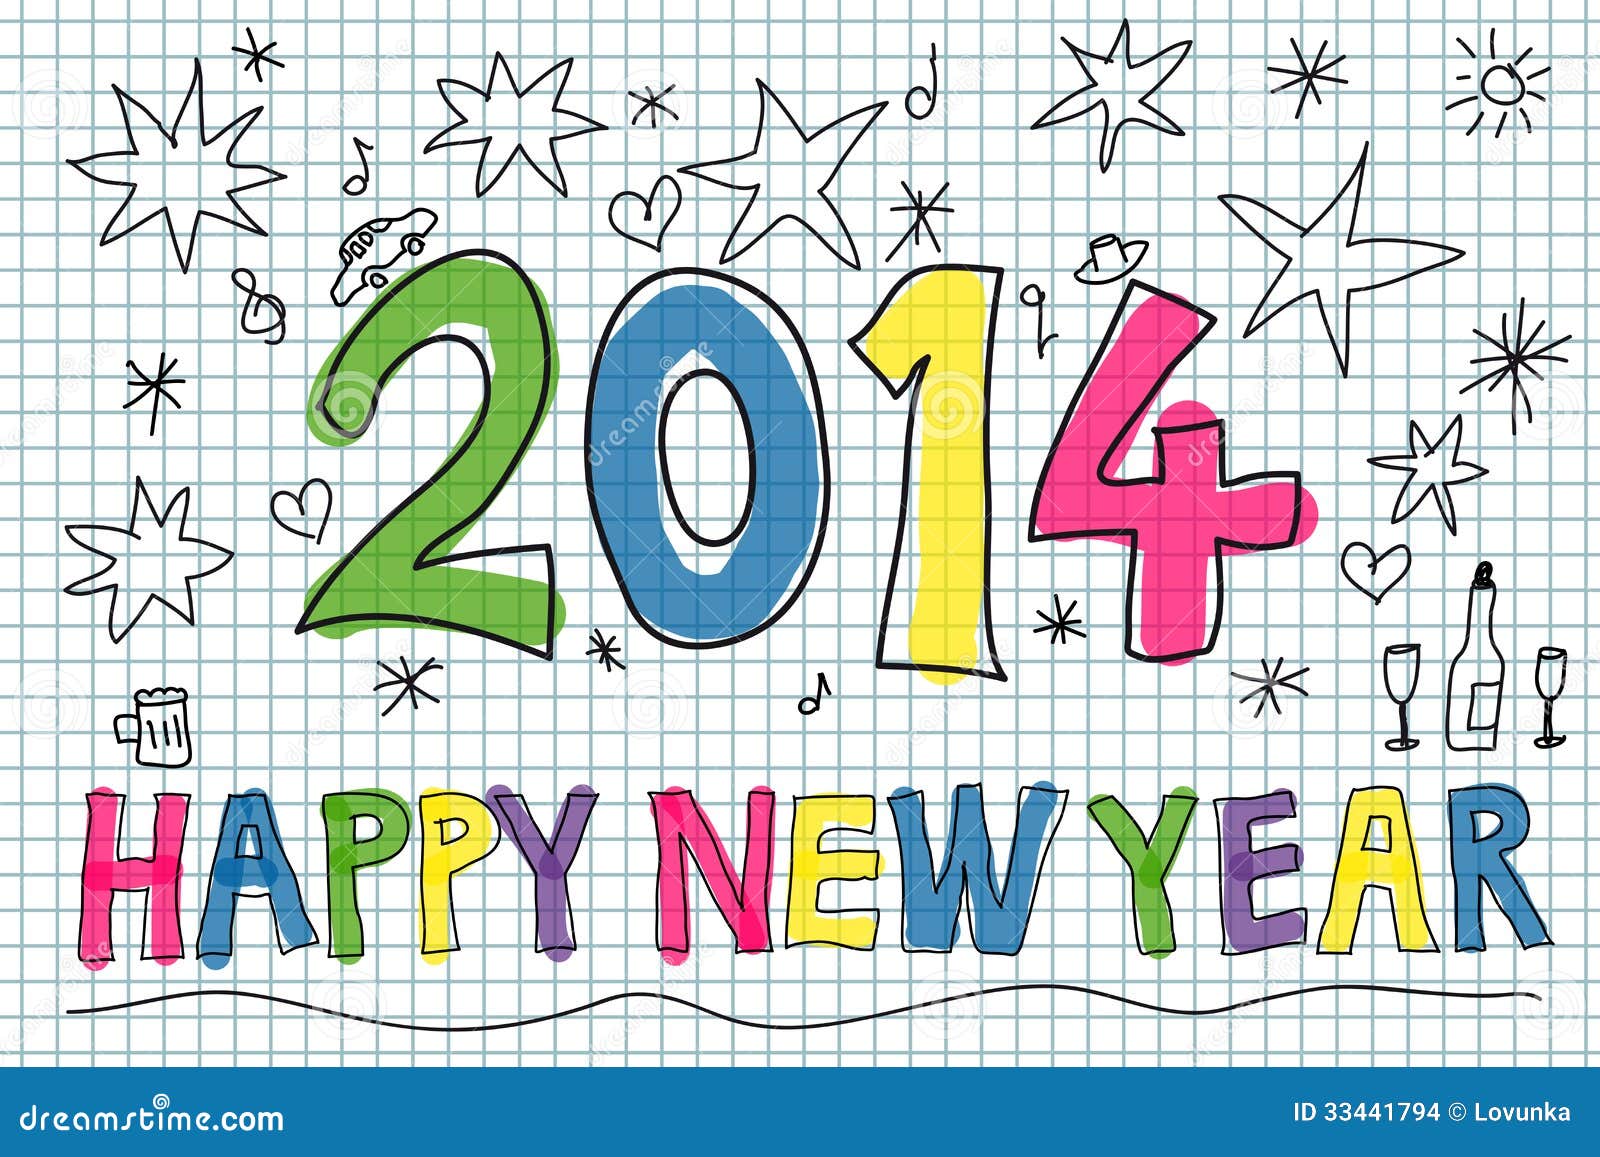 happy new year 2014 banner clip art - photo #9